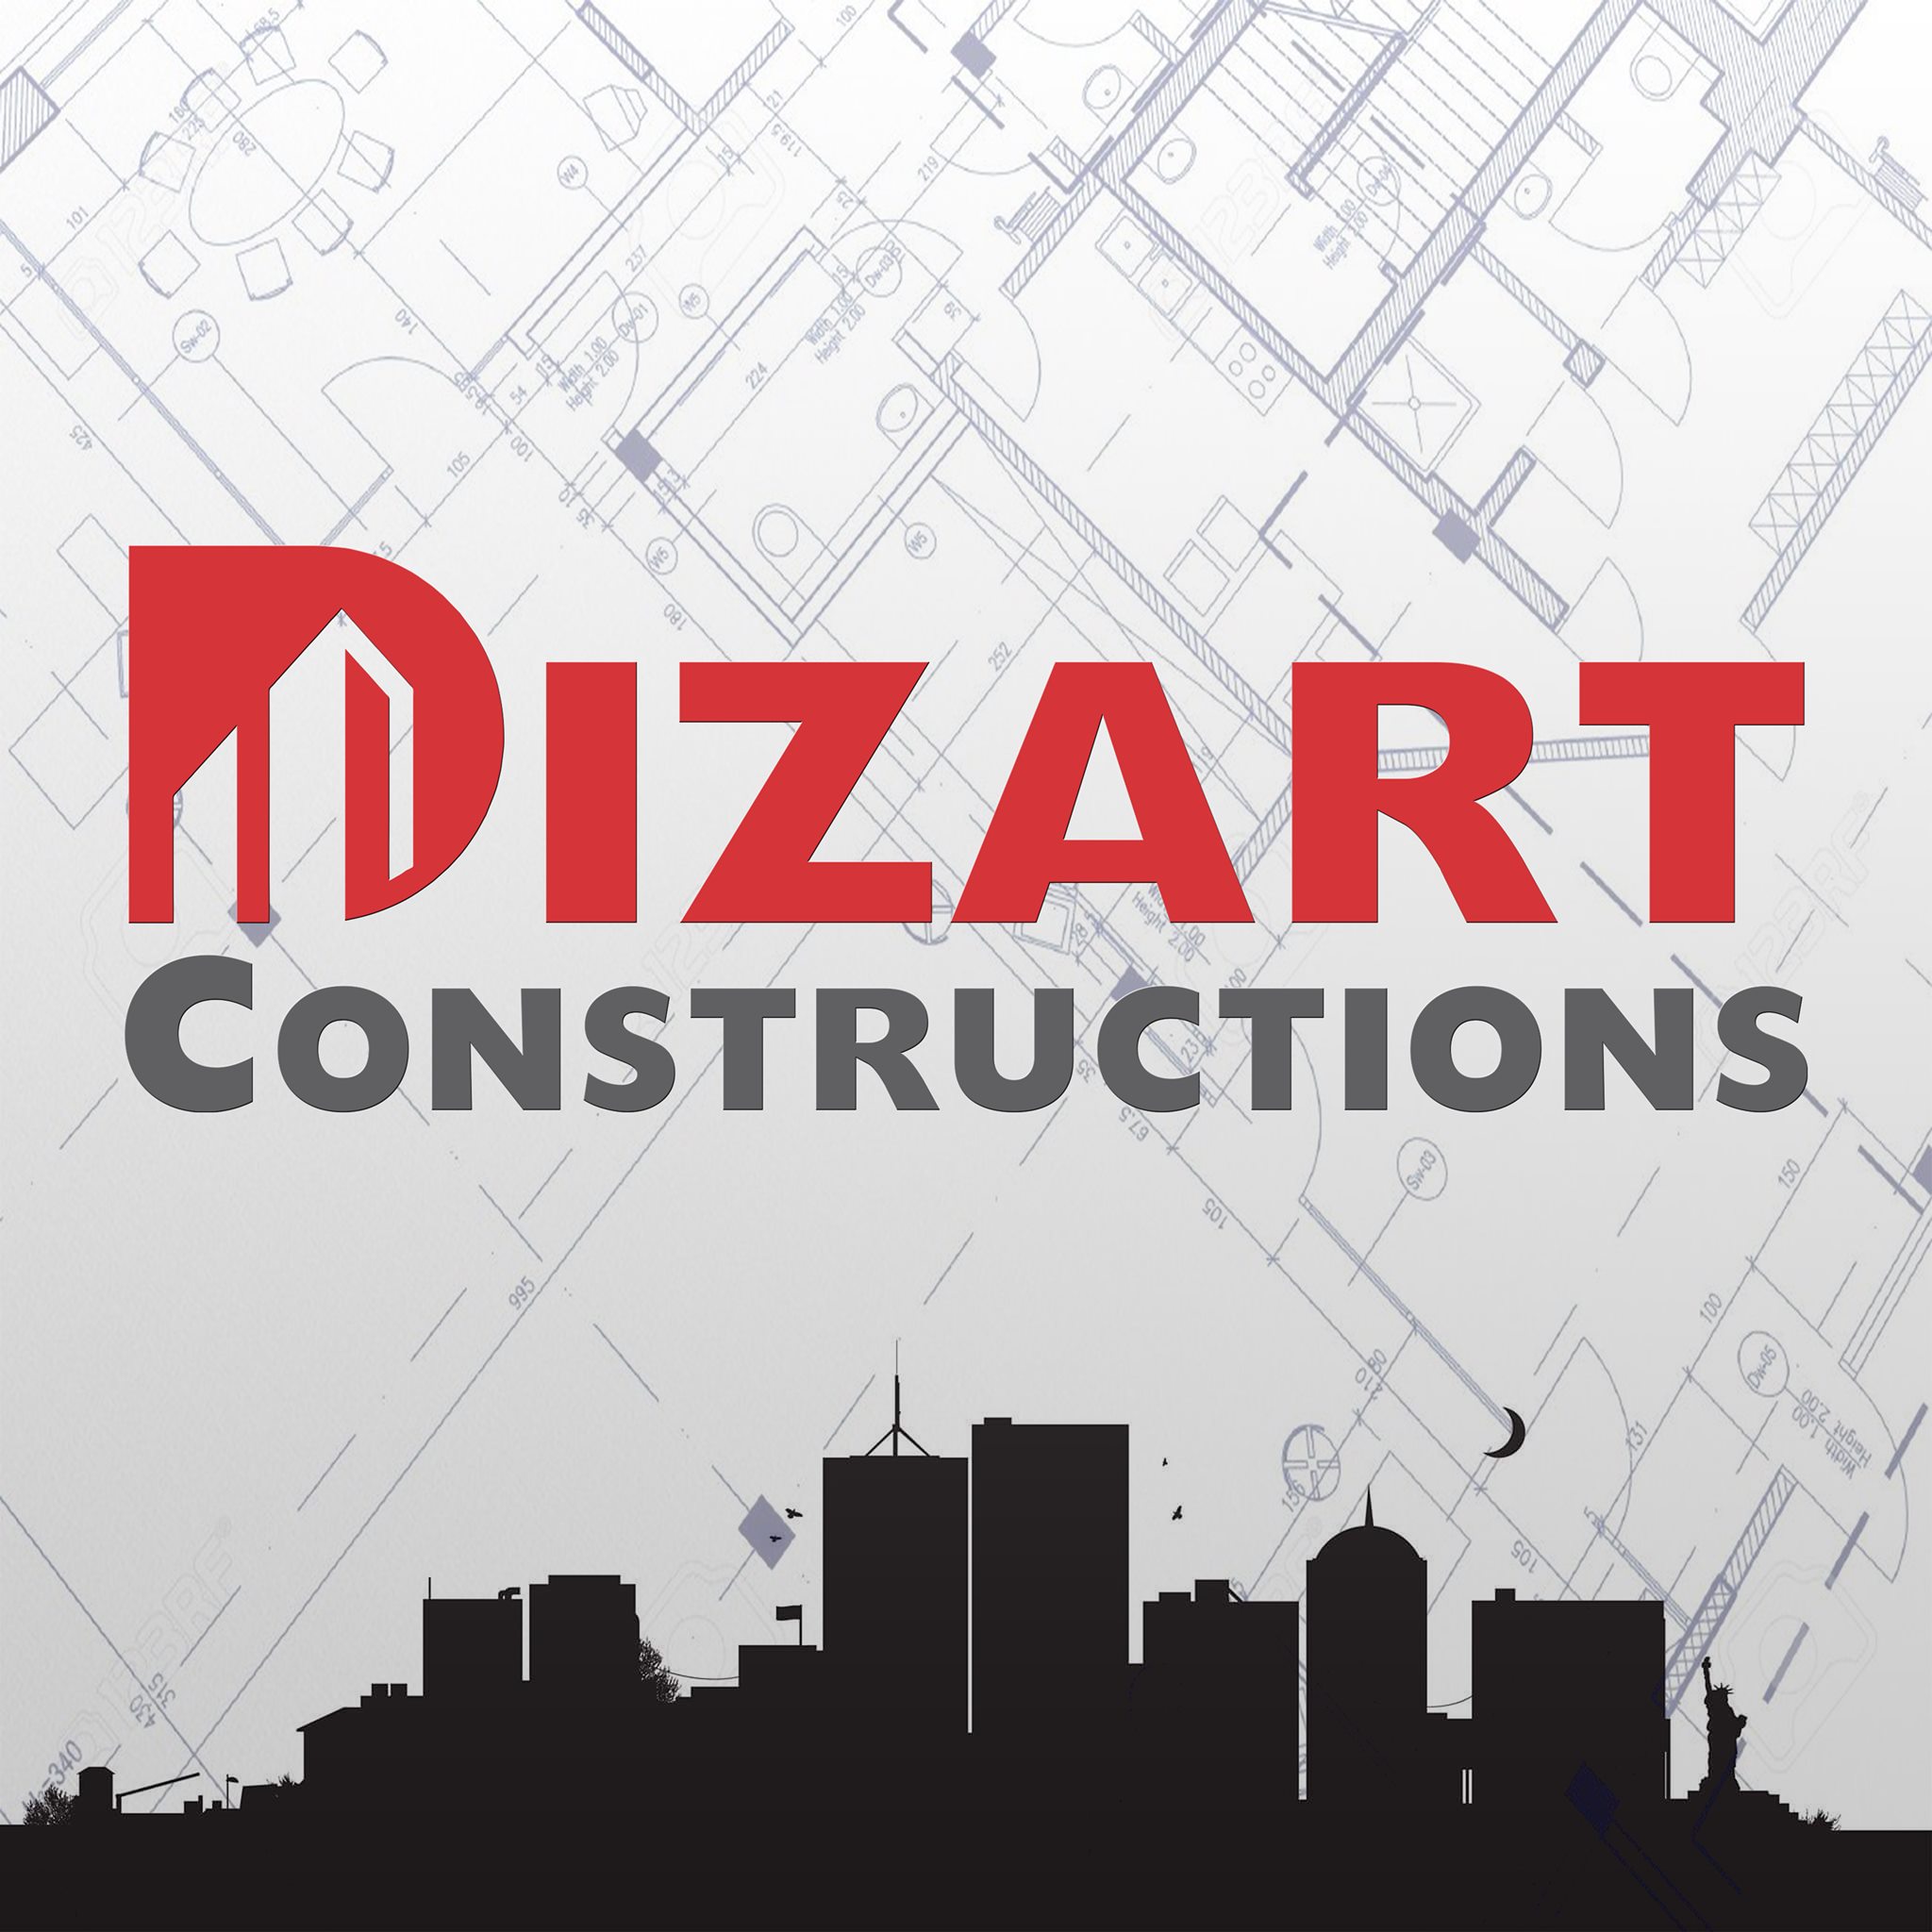 Dizart Constructions|Architect|Professional Services